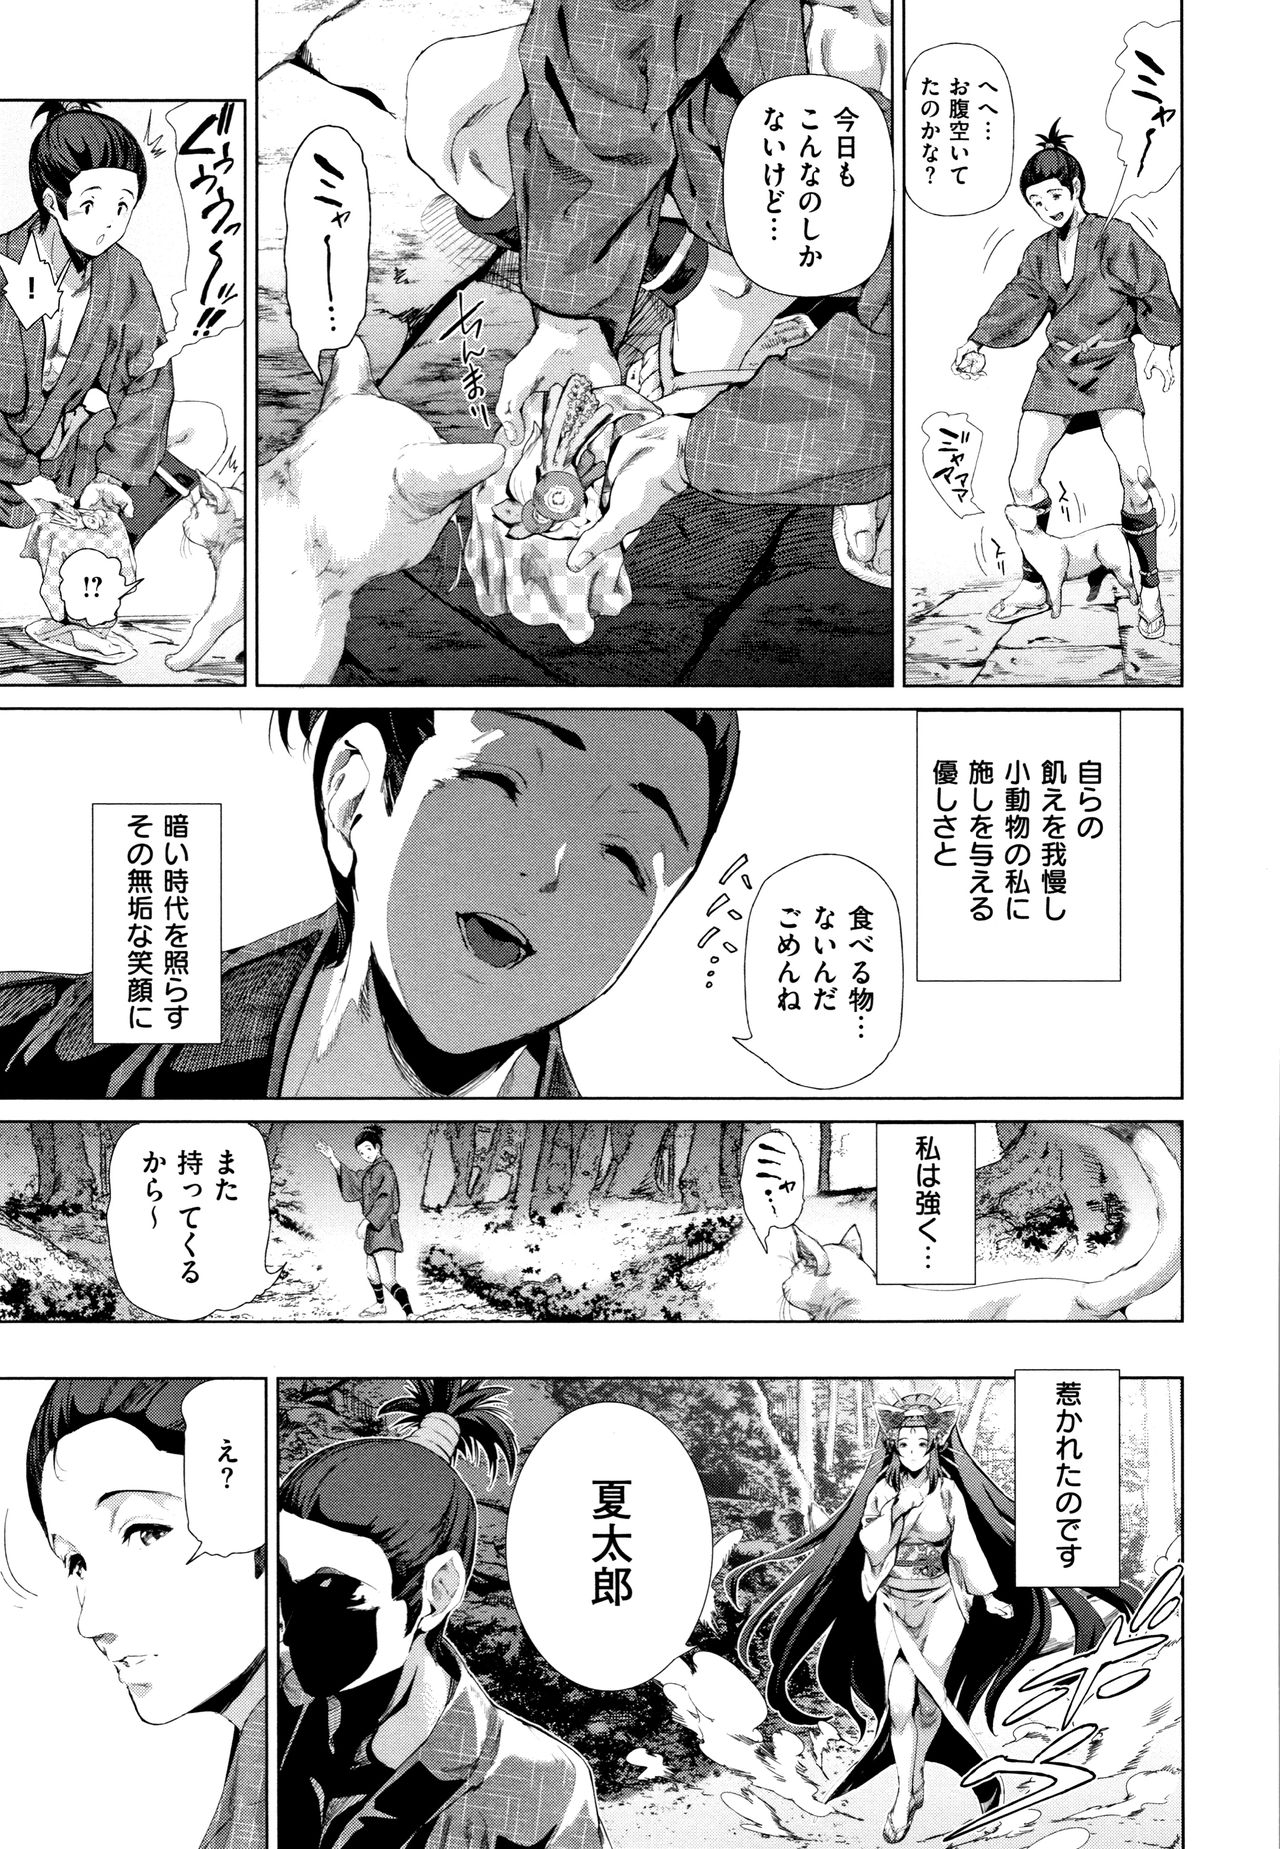 [Suzuhane Suzu] Cos wa Midara na Kamen Shogyouban - Cosplay is a mask [wakes up erotic personality...] 157